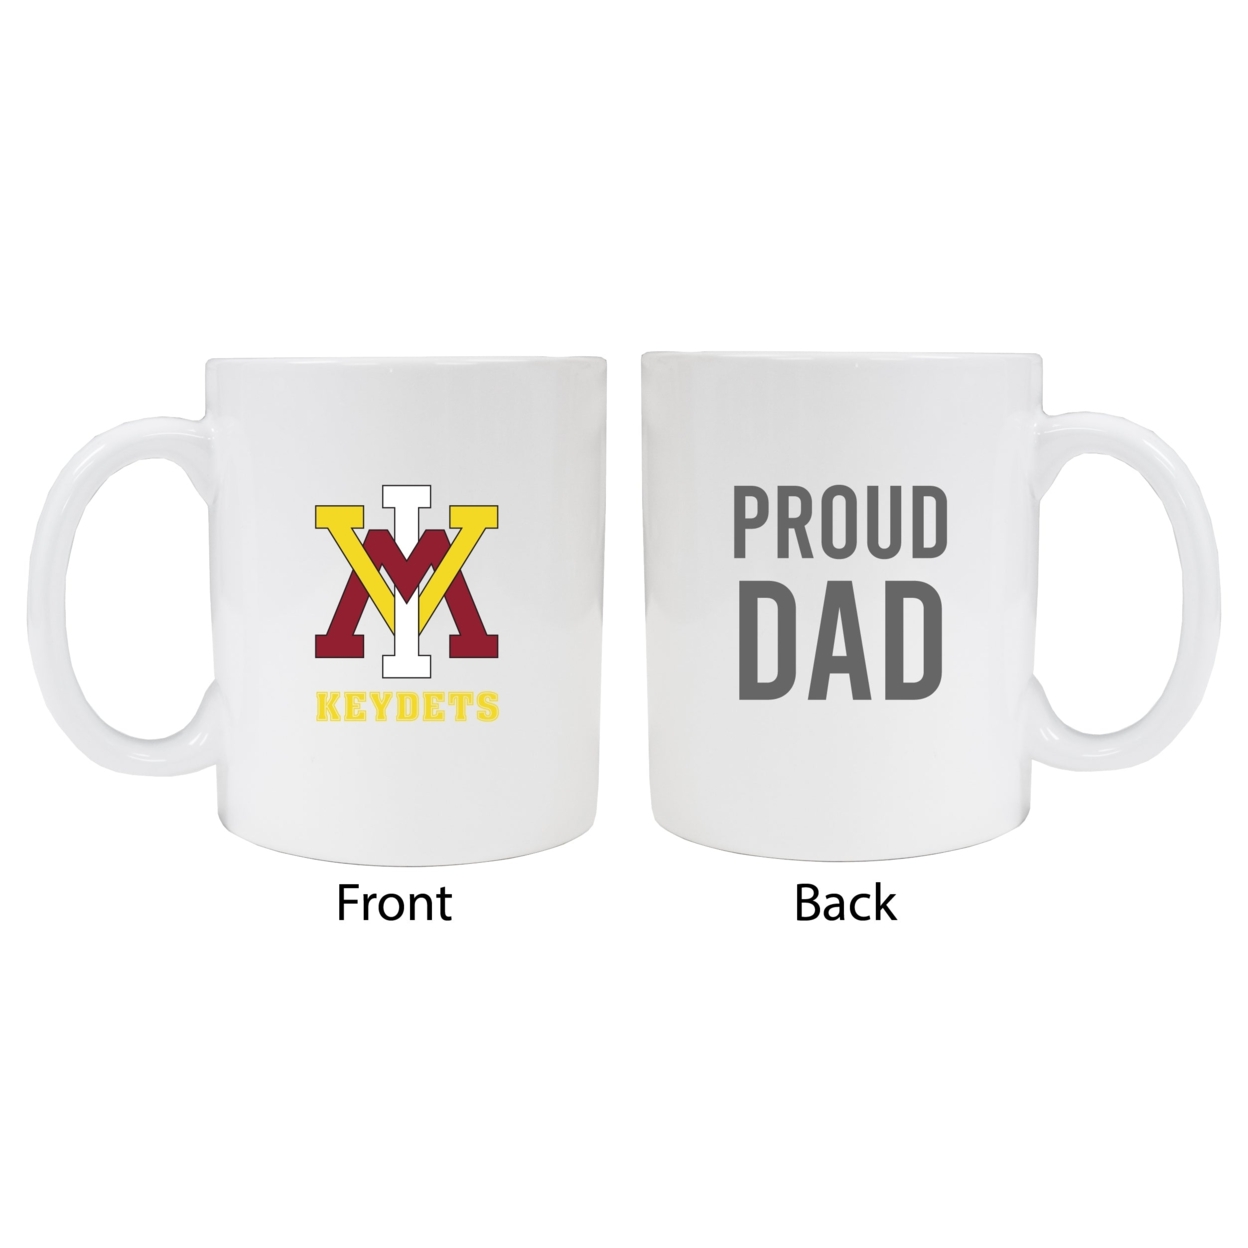 VMI Keydets Proud Dad Ceramic Coffee Mug - White (2 Pack)